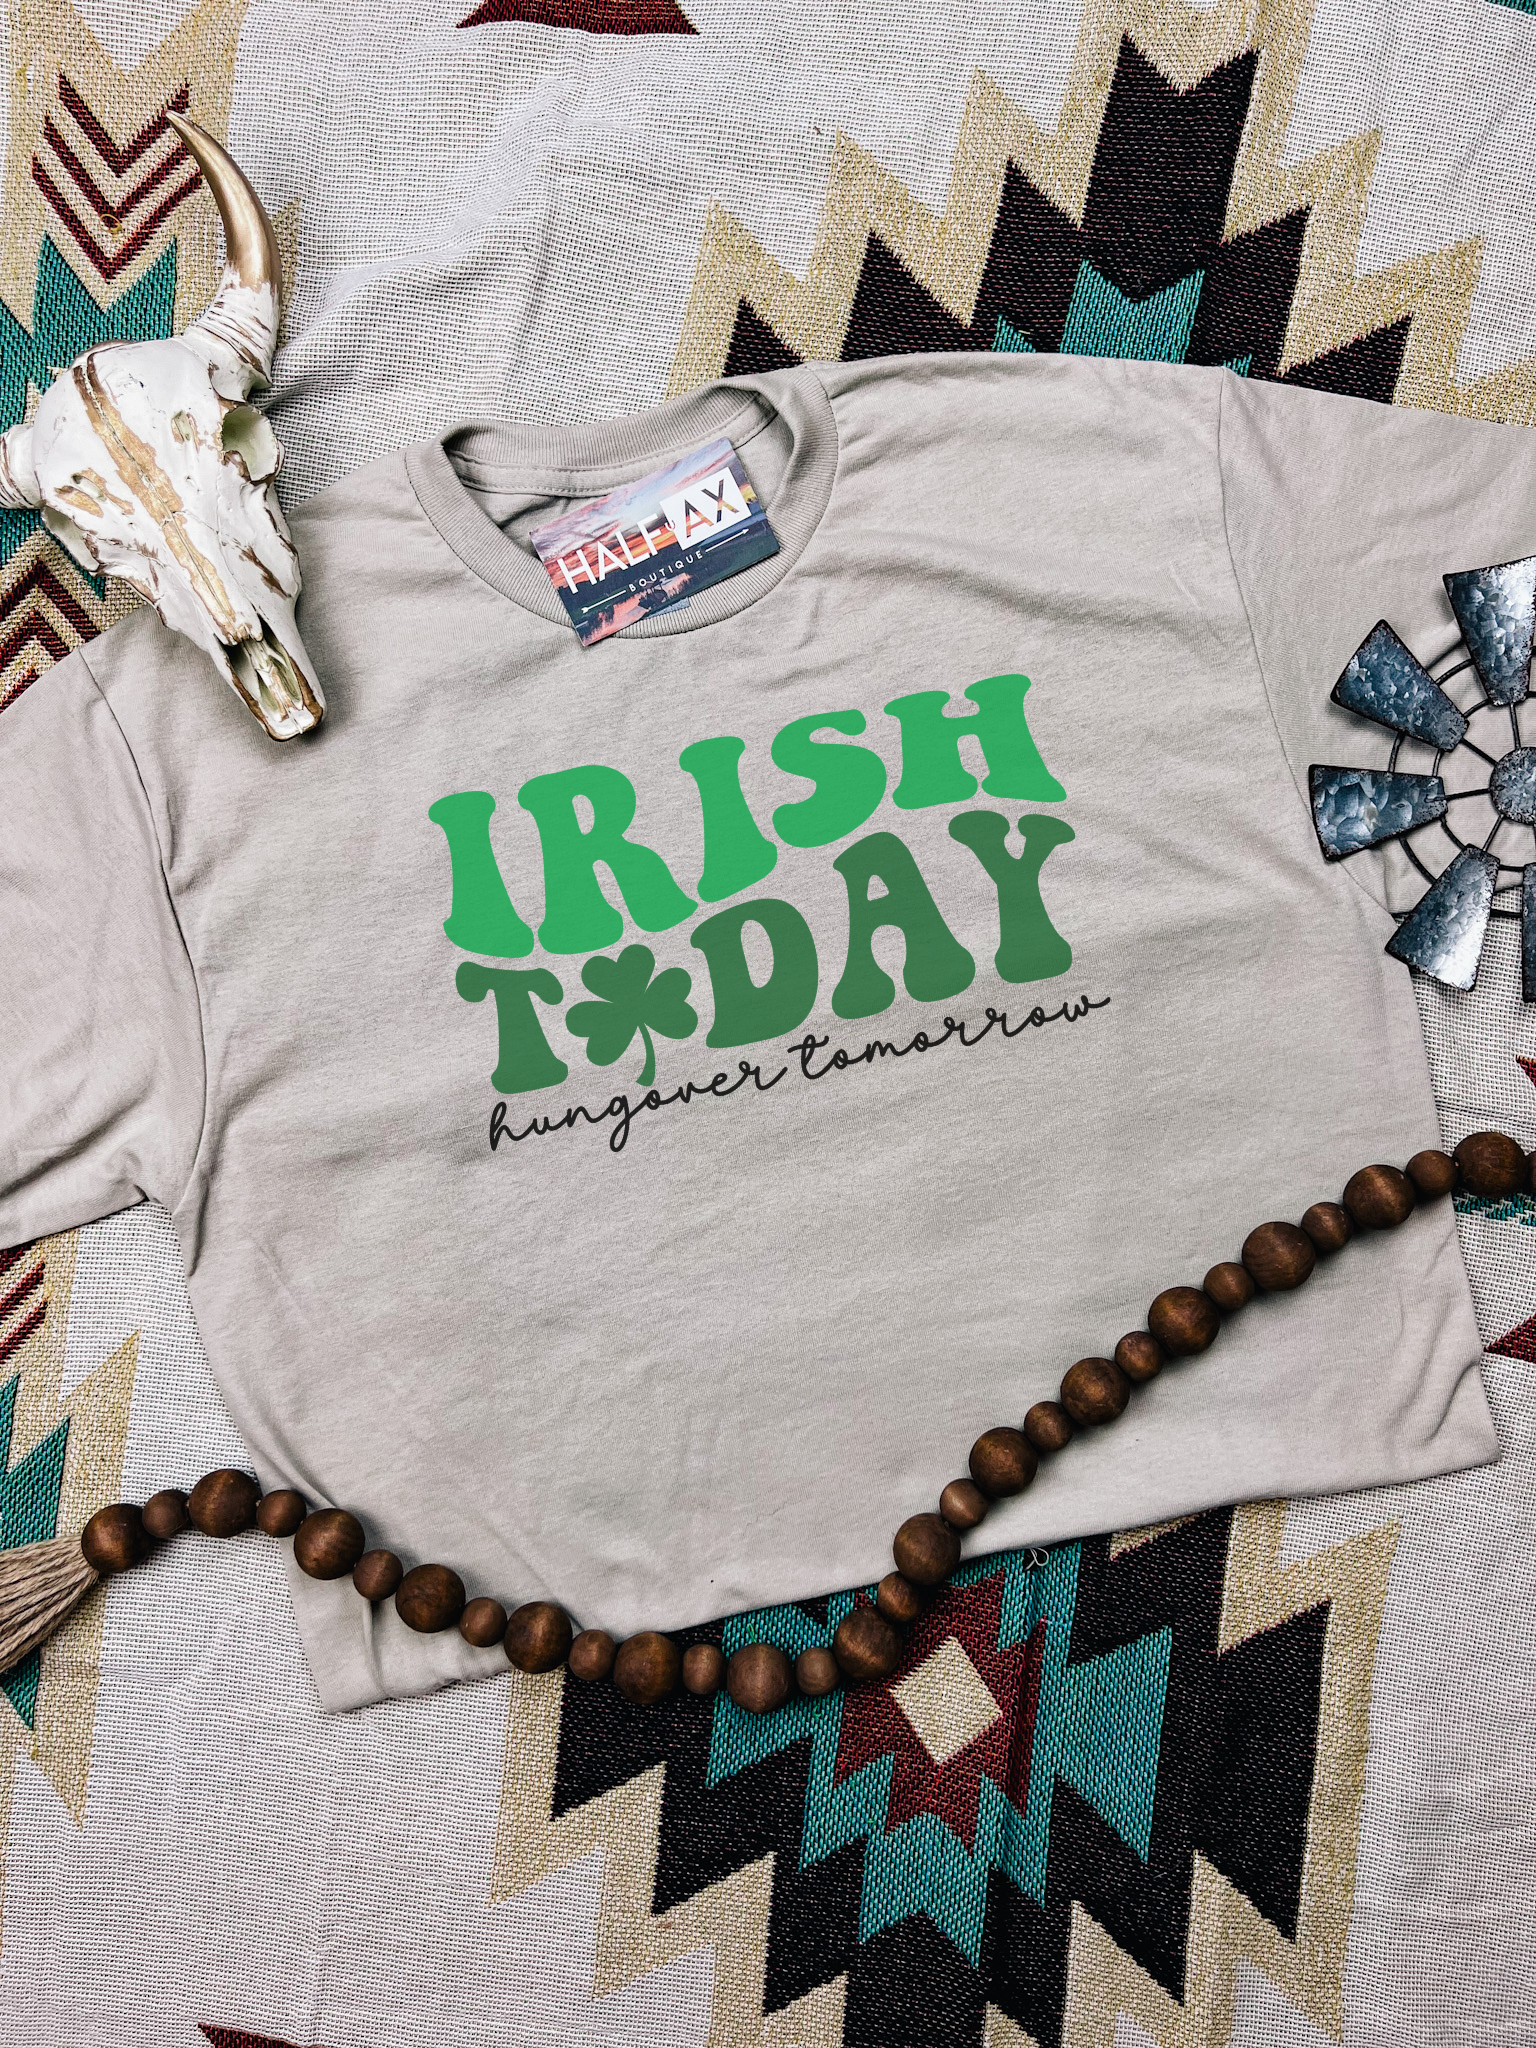 Irish Today || Tee or Sweatshirt